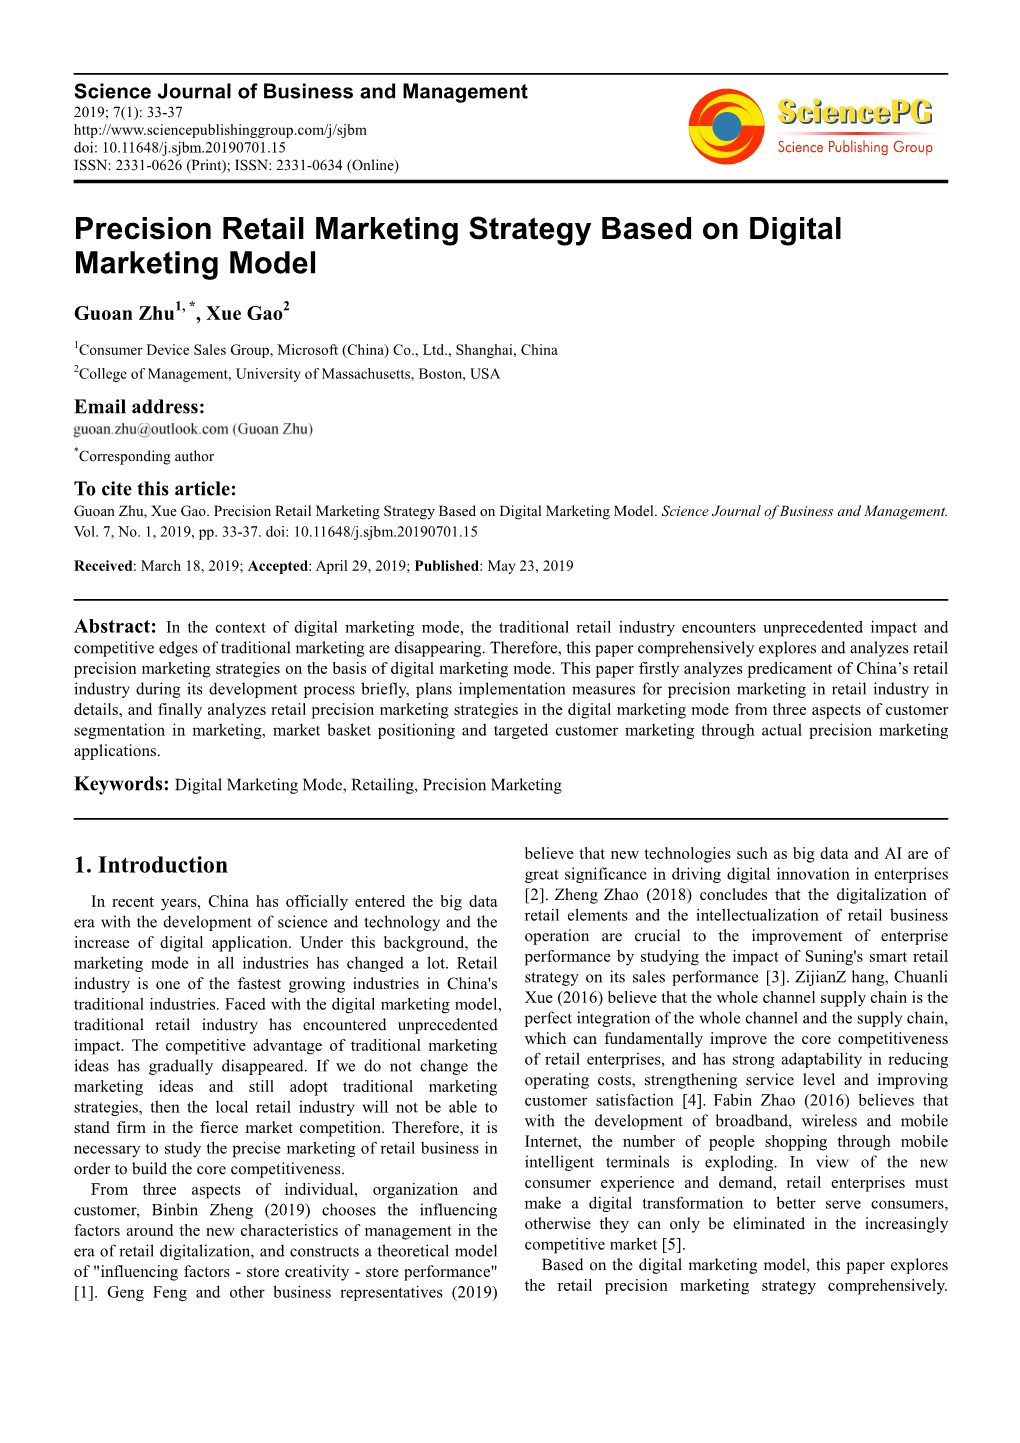 Precision Retail Marketing Strategy Based on Digital Marketing Model